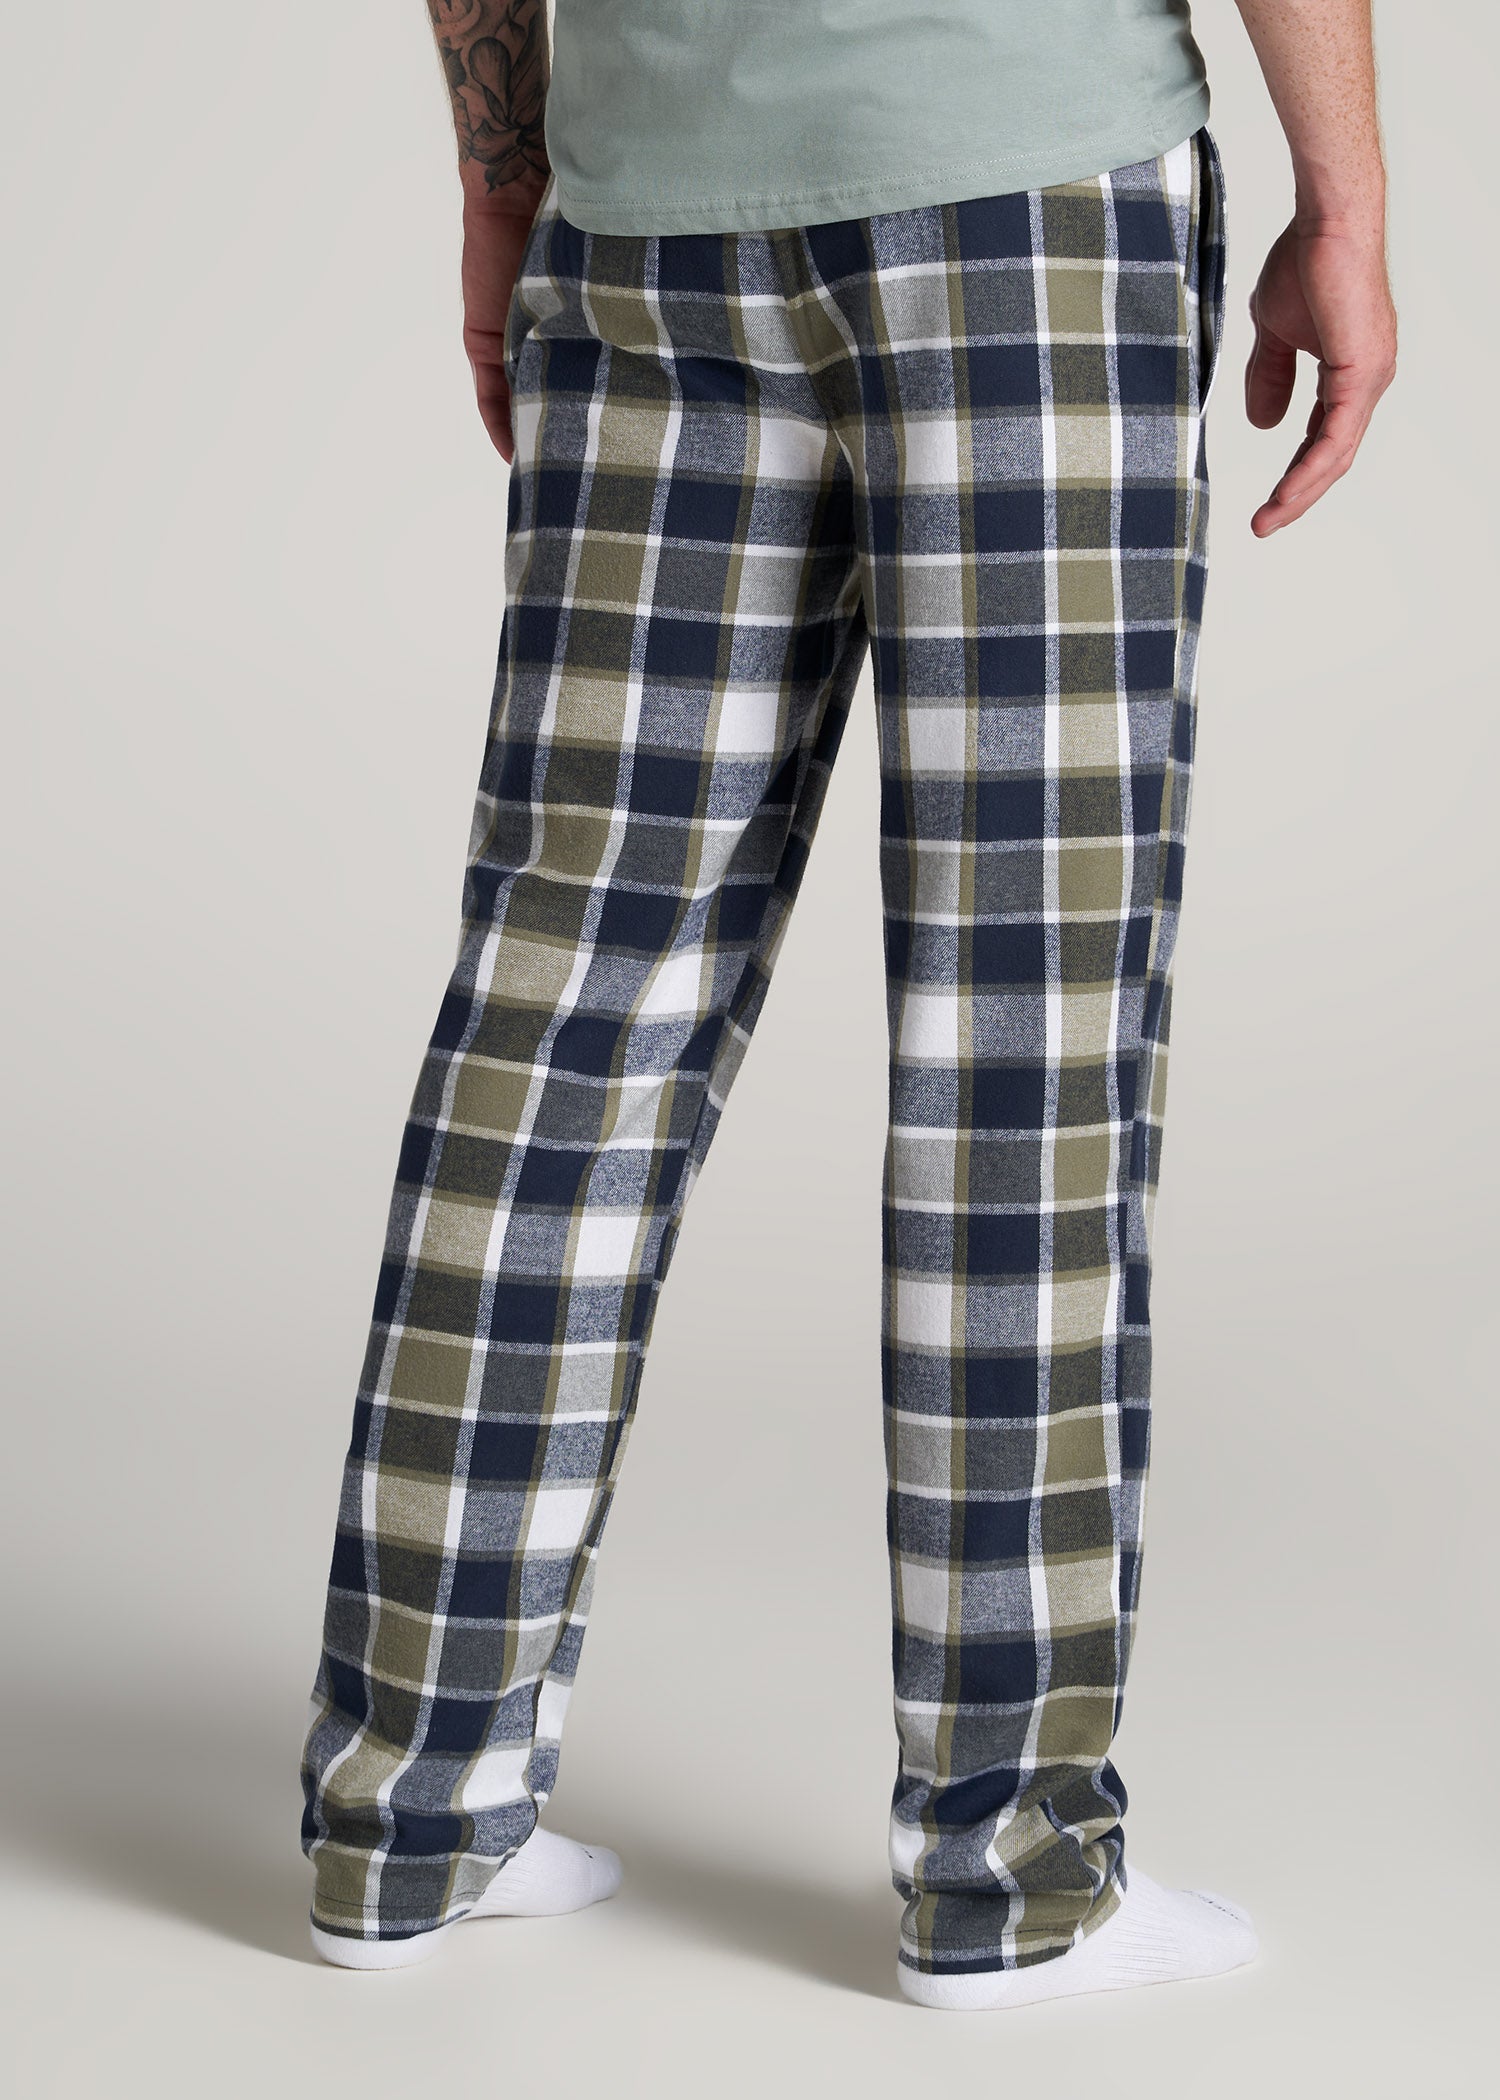 Women's Cotton Pajama Pants Comfy Stretch Pj Bottoms Pants Sleep Lounge  Long Pant